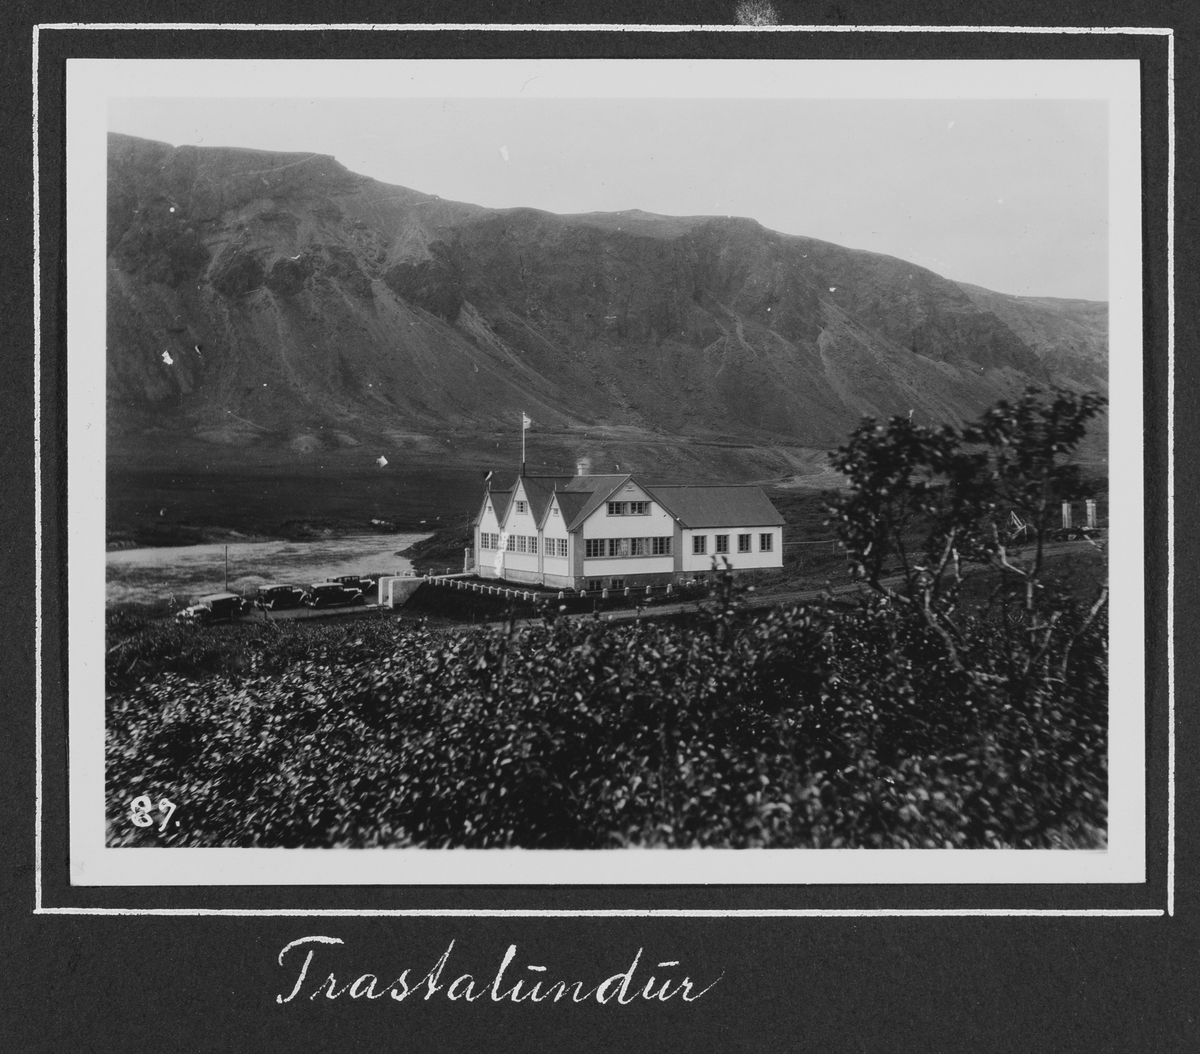 Fra 1000 årsfesten for Alltinget på Island i 1930. Trastalundur.